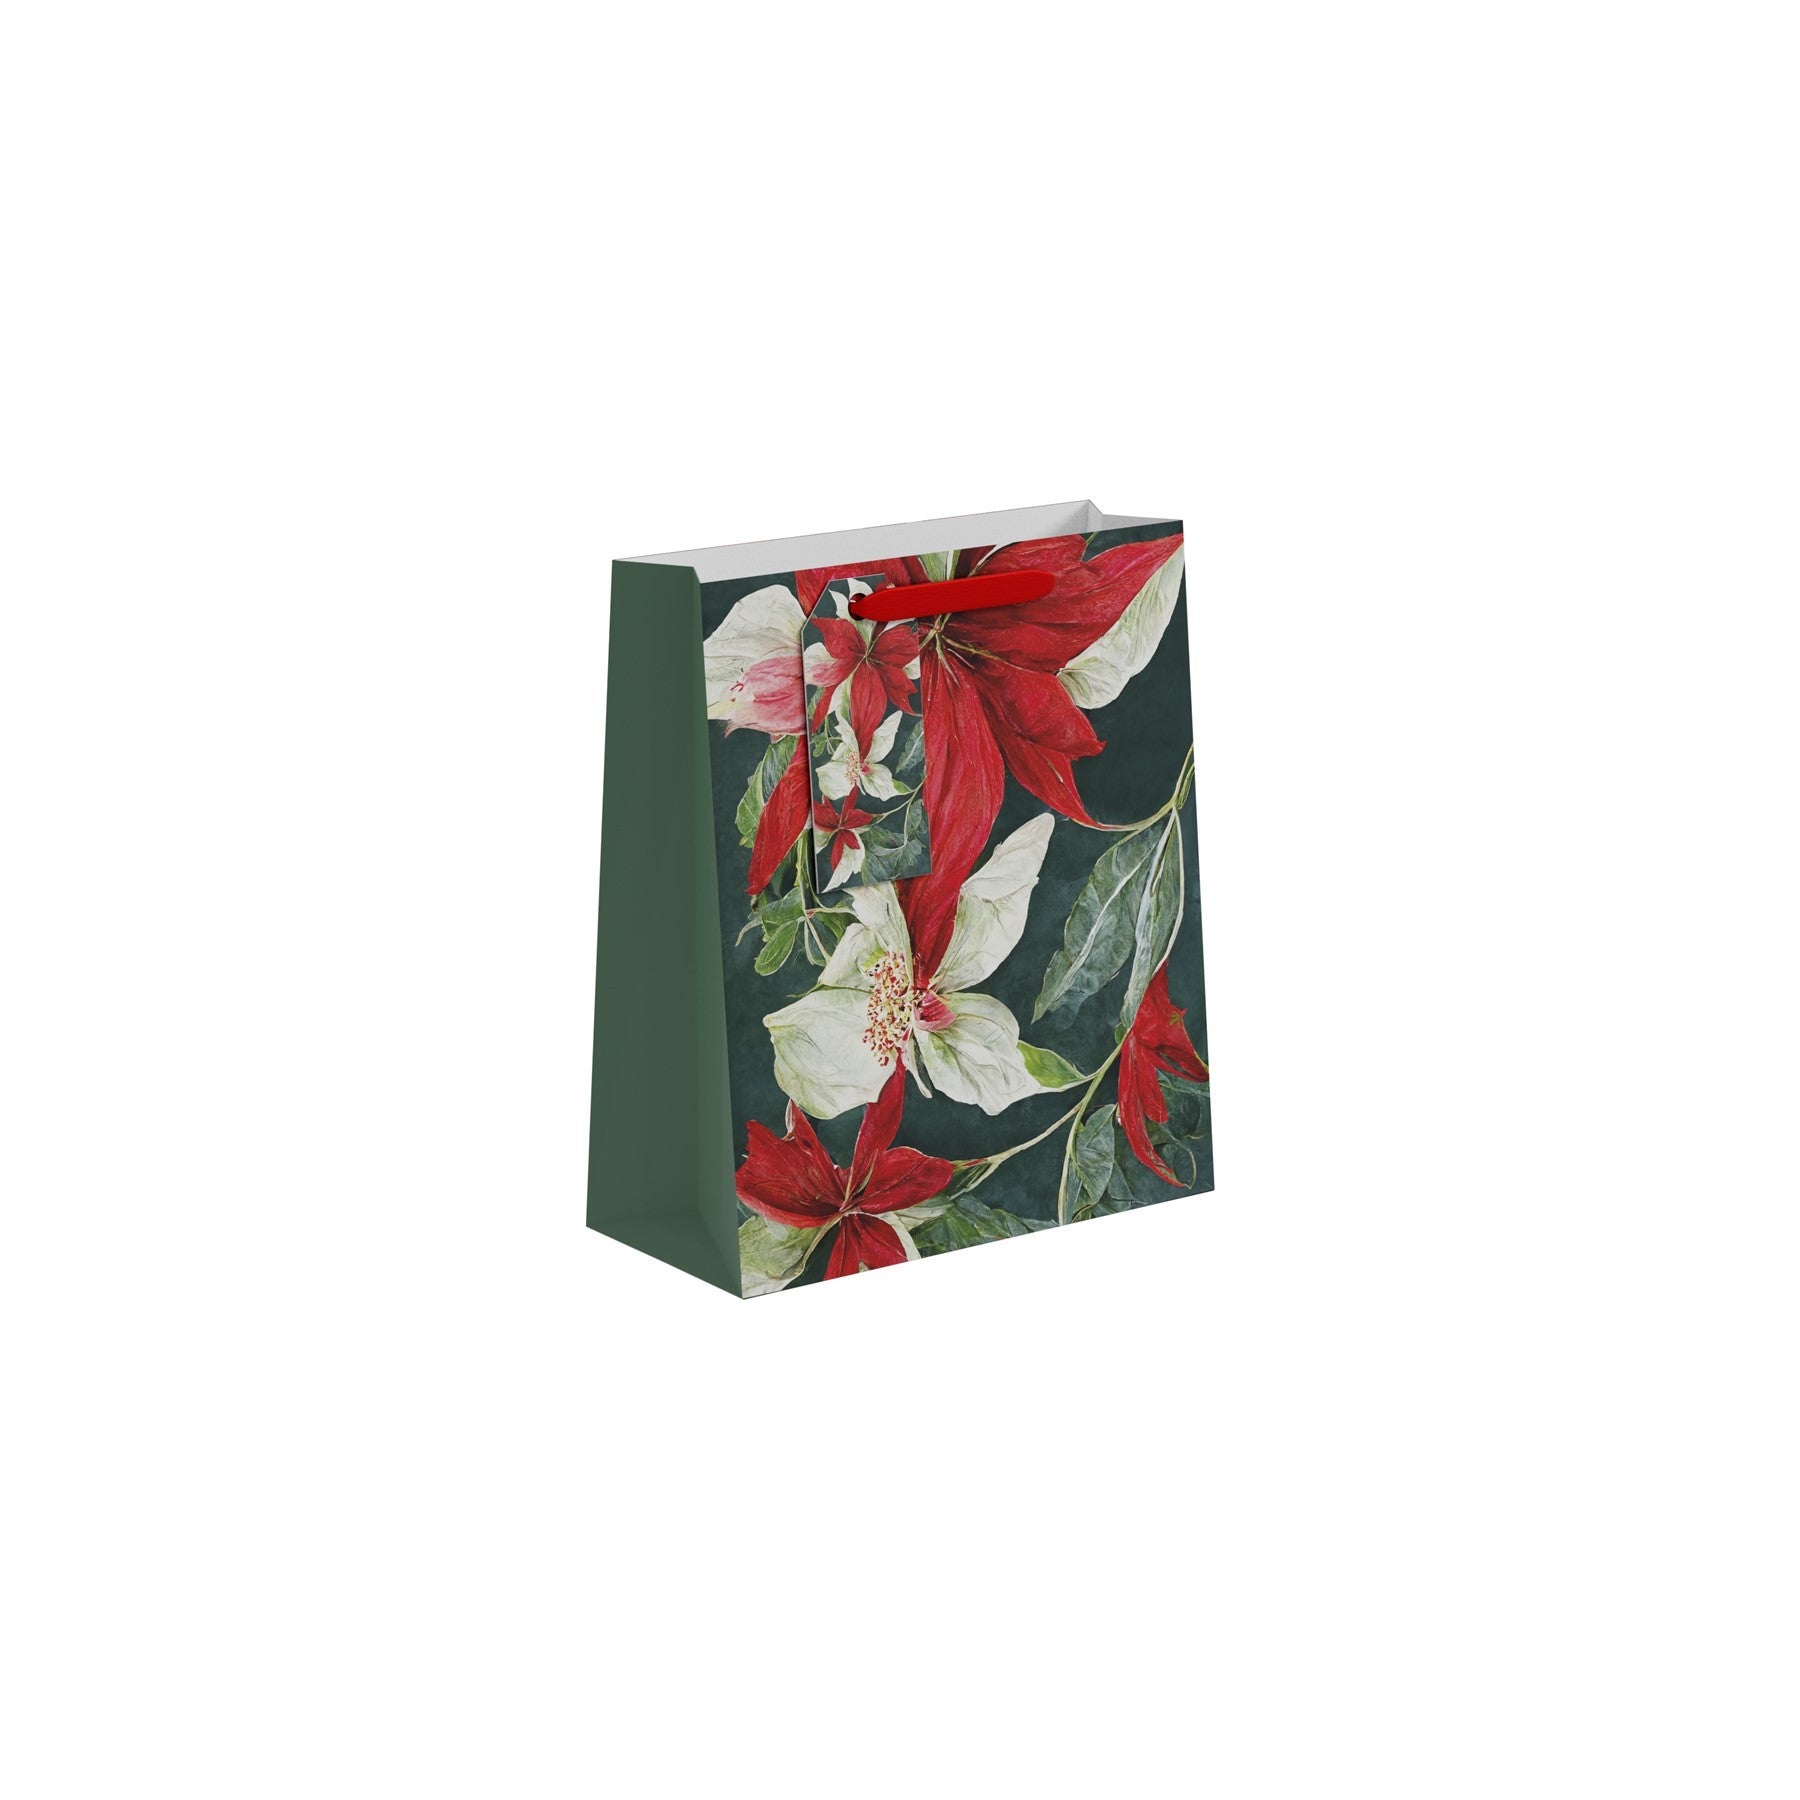 View Red White Poinsettia Gift Bag Medium information